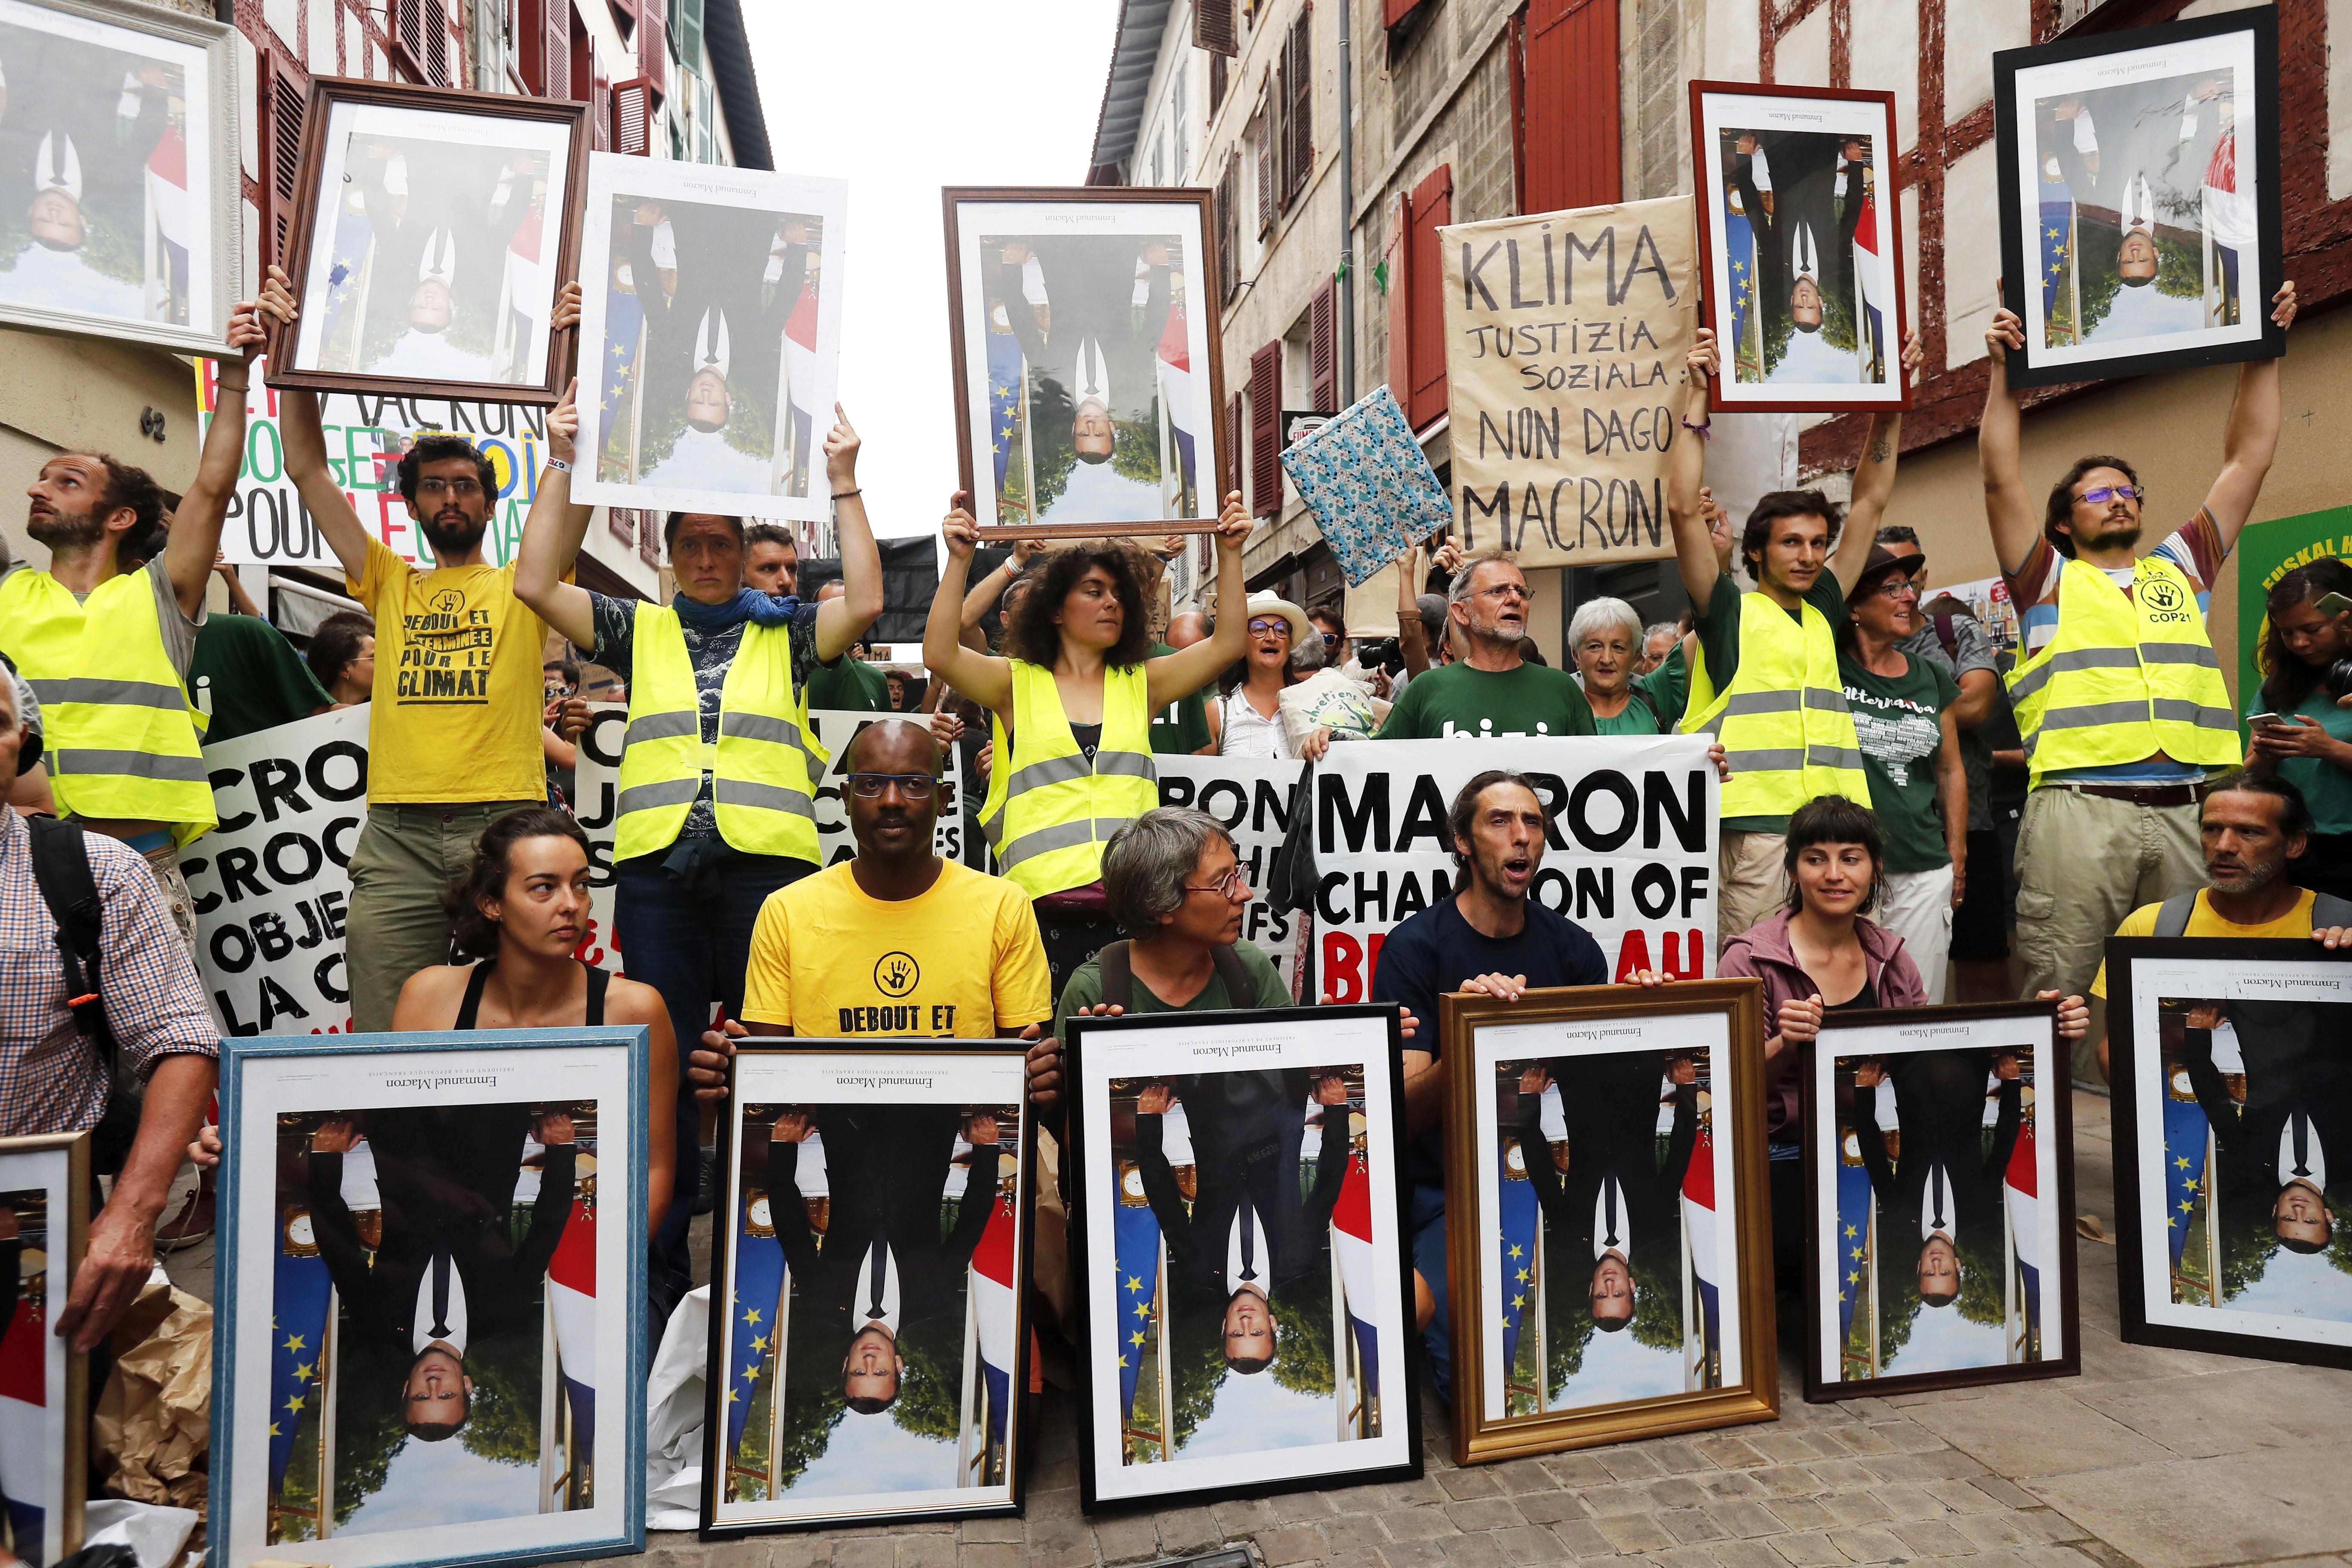 Ecologistes es manifesten a Baiona, a escassos quilòmetres del G7